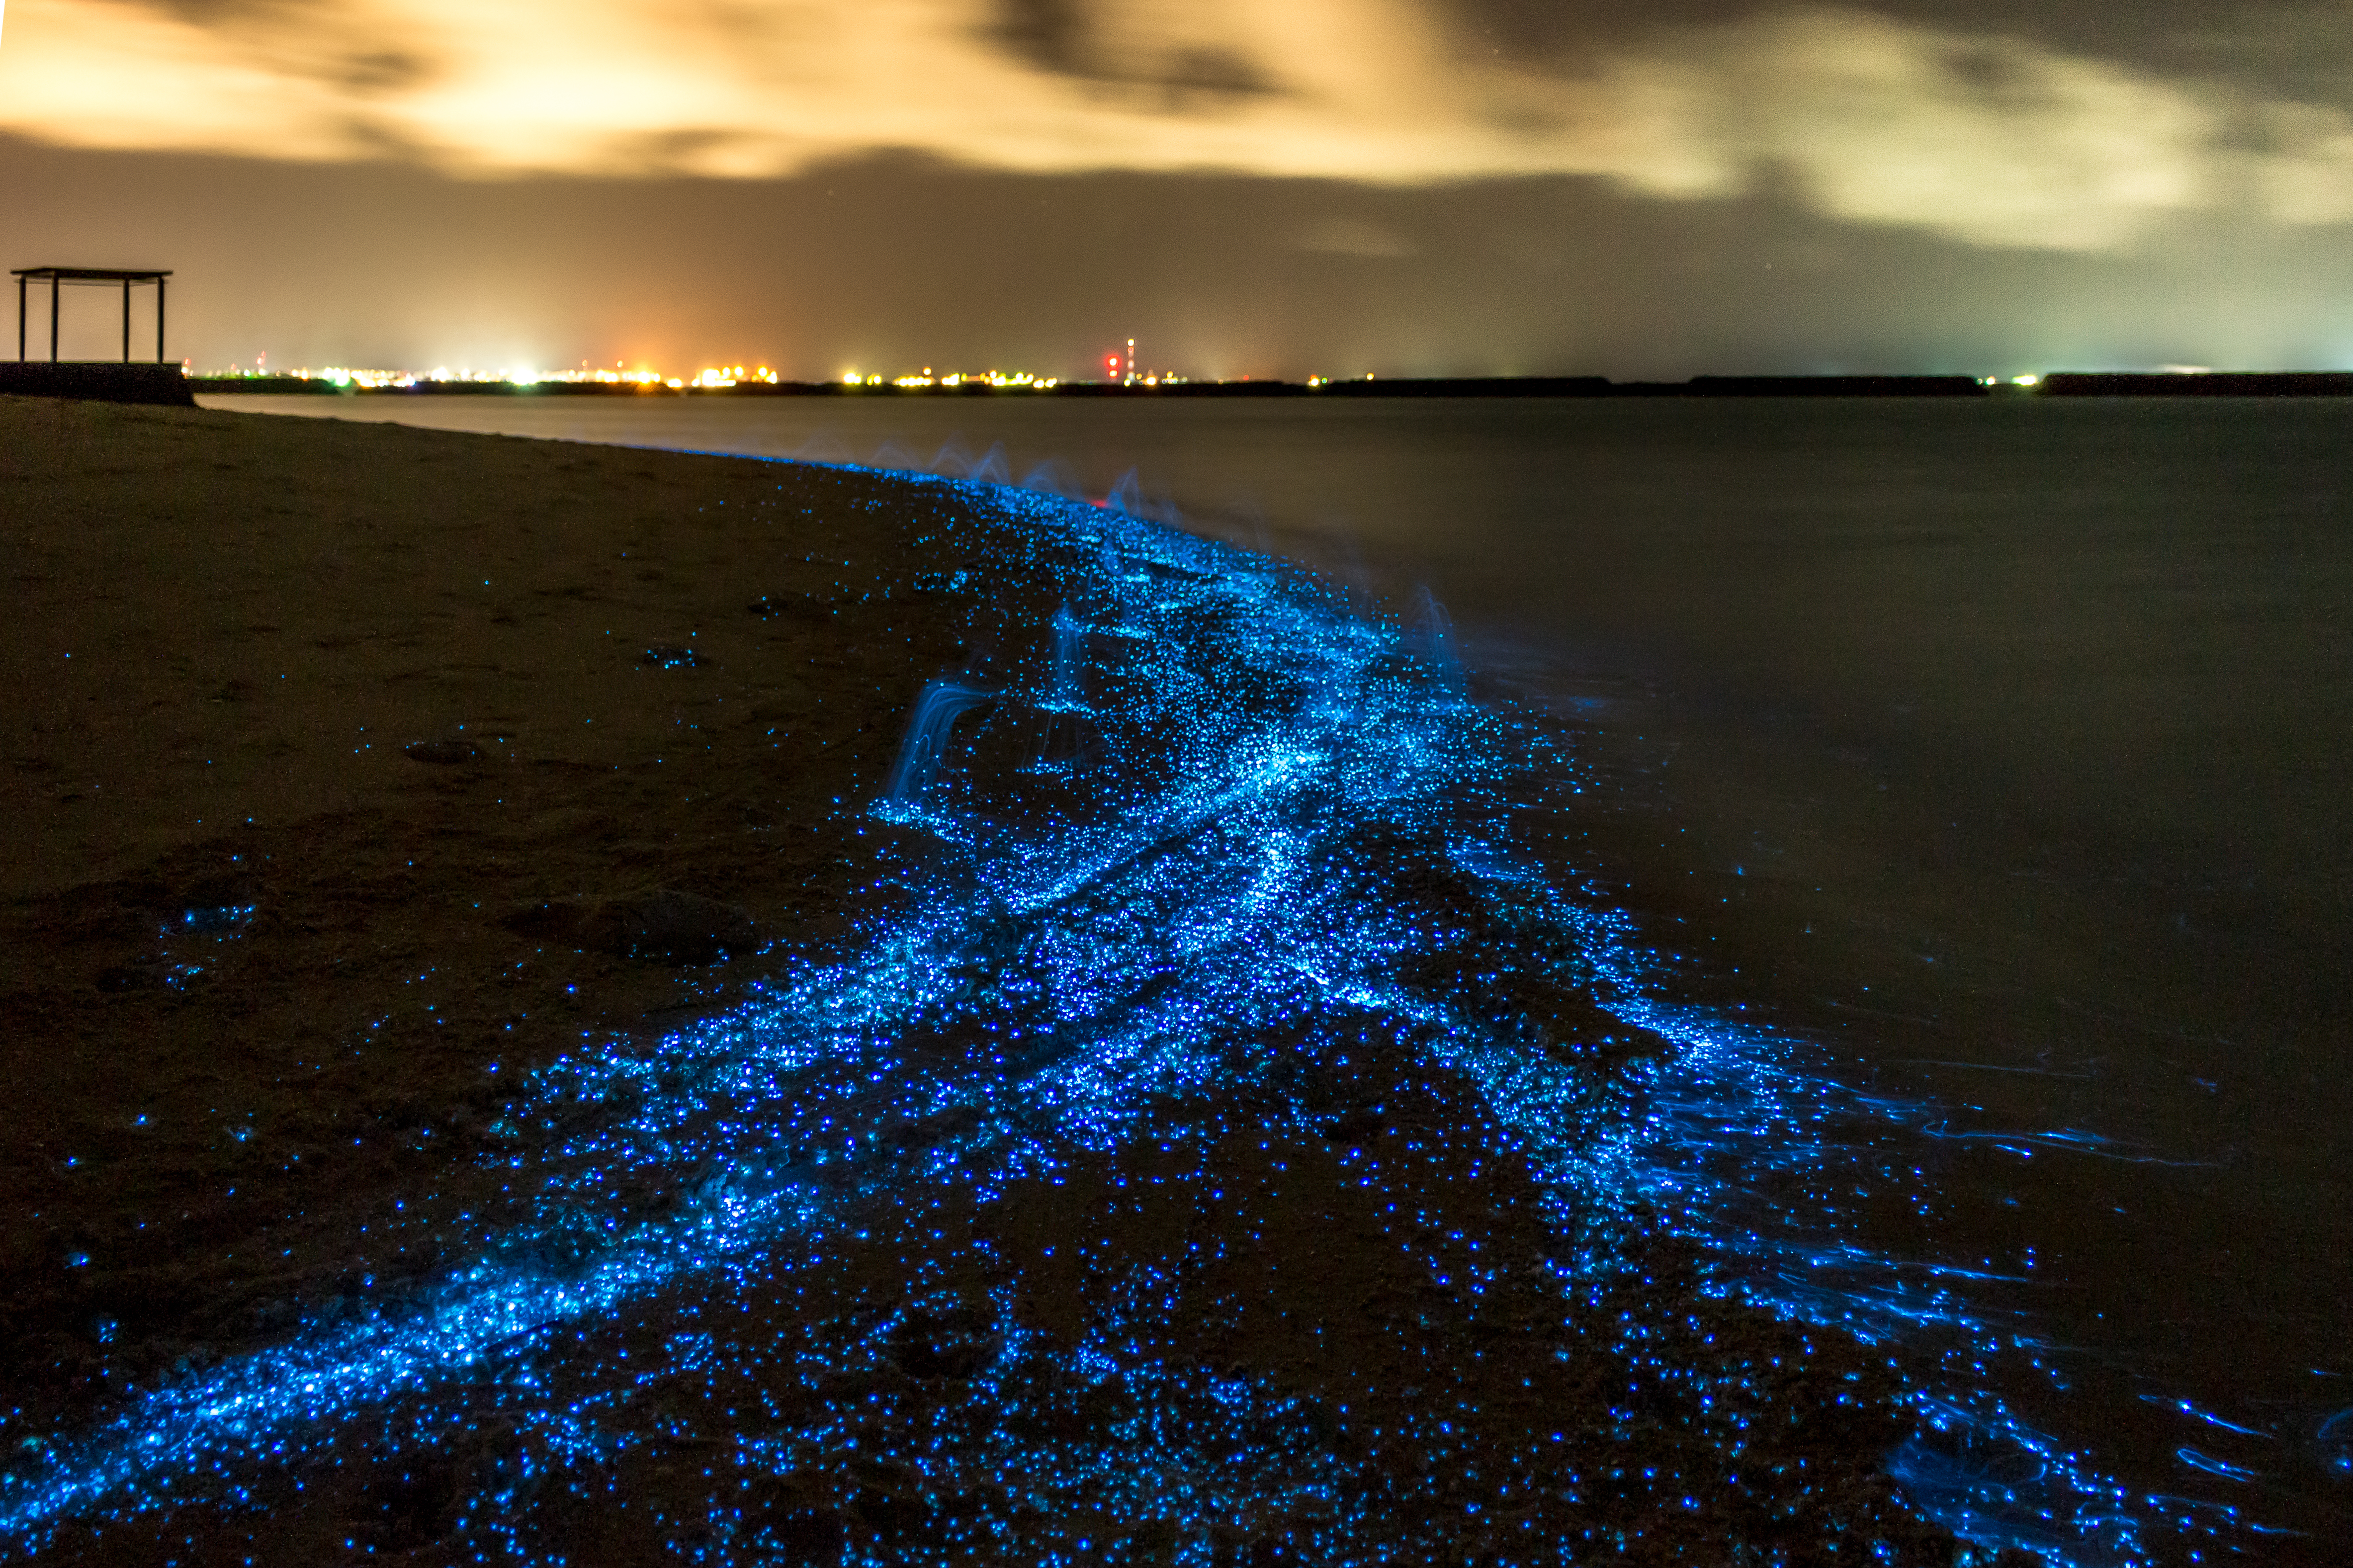 Plankton bioluminescense